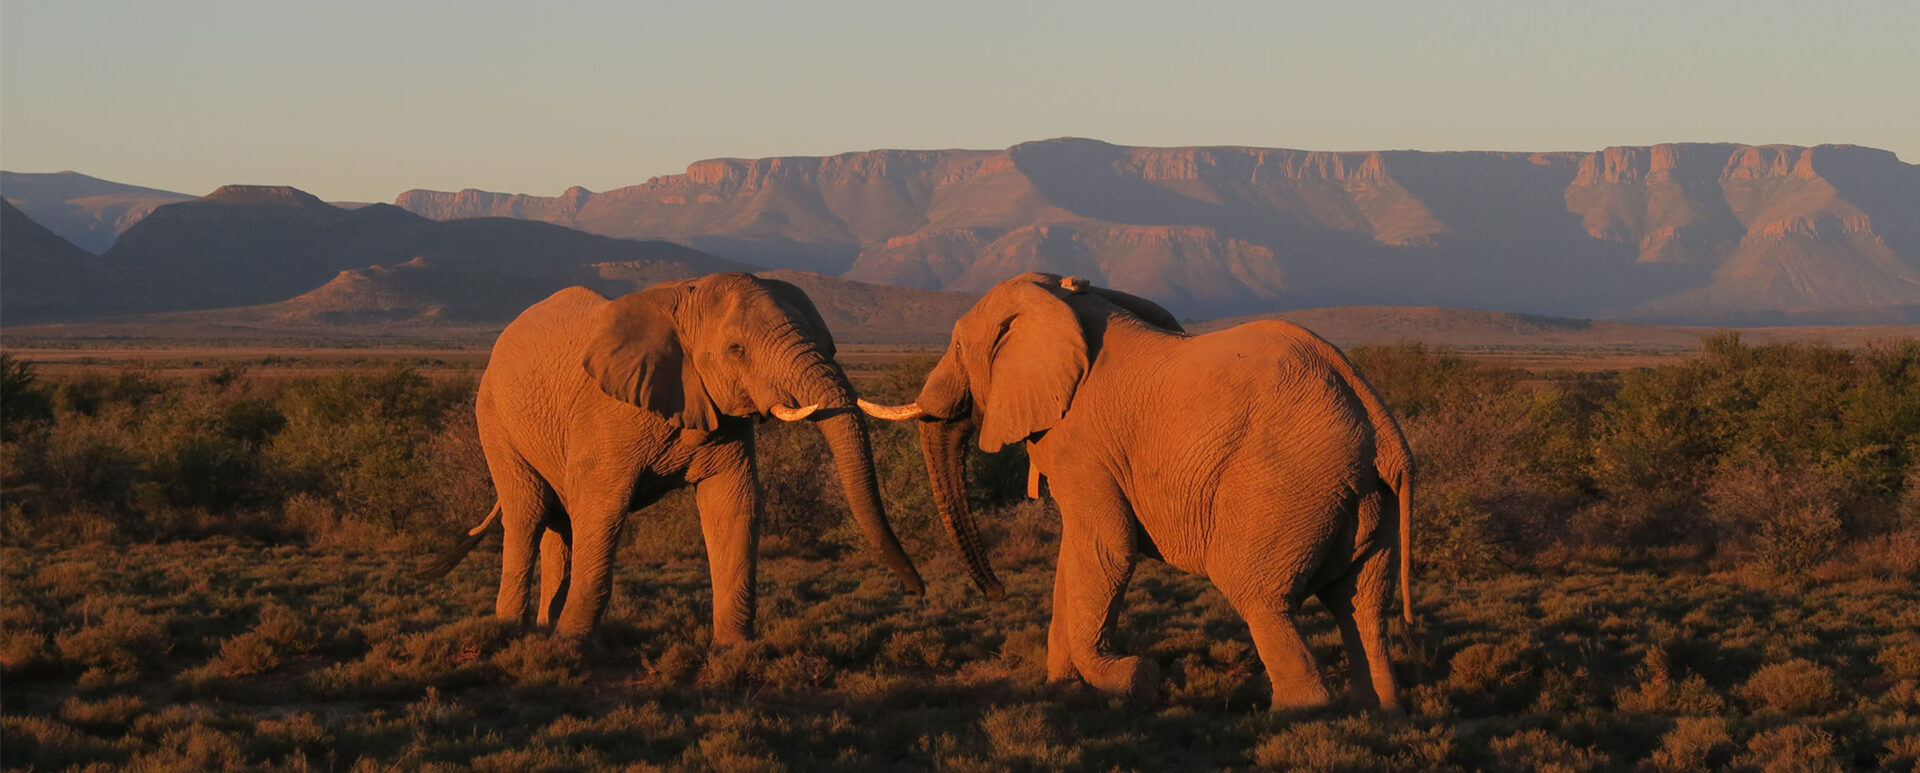 On safari in South Africa’s Samara Private Game Reserve